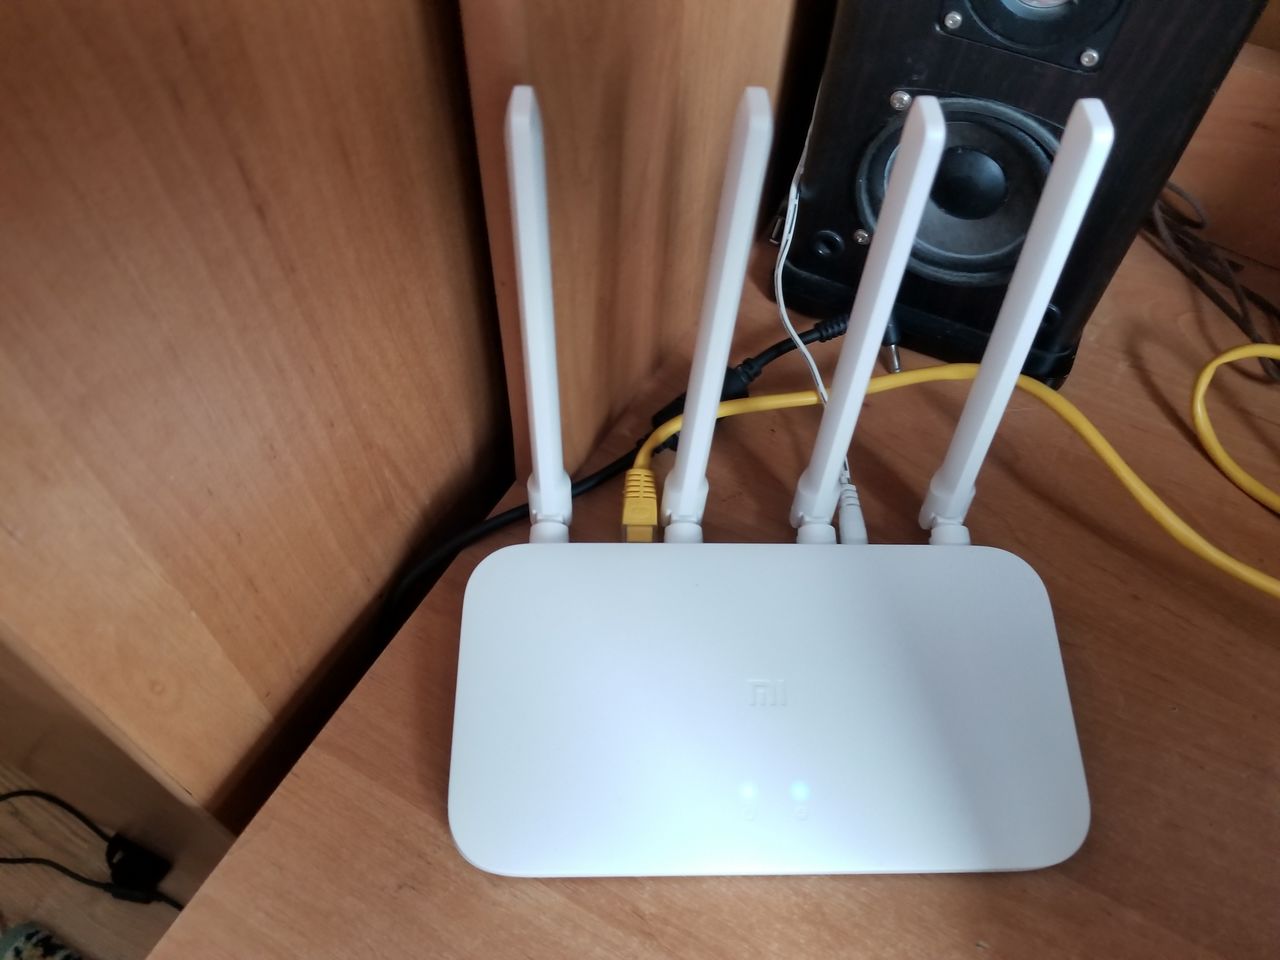 Mi wifi router 4a gigabit. Xiaomi mi 4c роутер. Xiaomi mi WIFI Router 4c. Xiaomi WIFI Router 4c. Wi-Fi роутер Xiaomi mi Wi-Fi Router 4c Global.